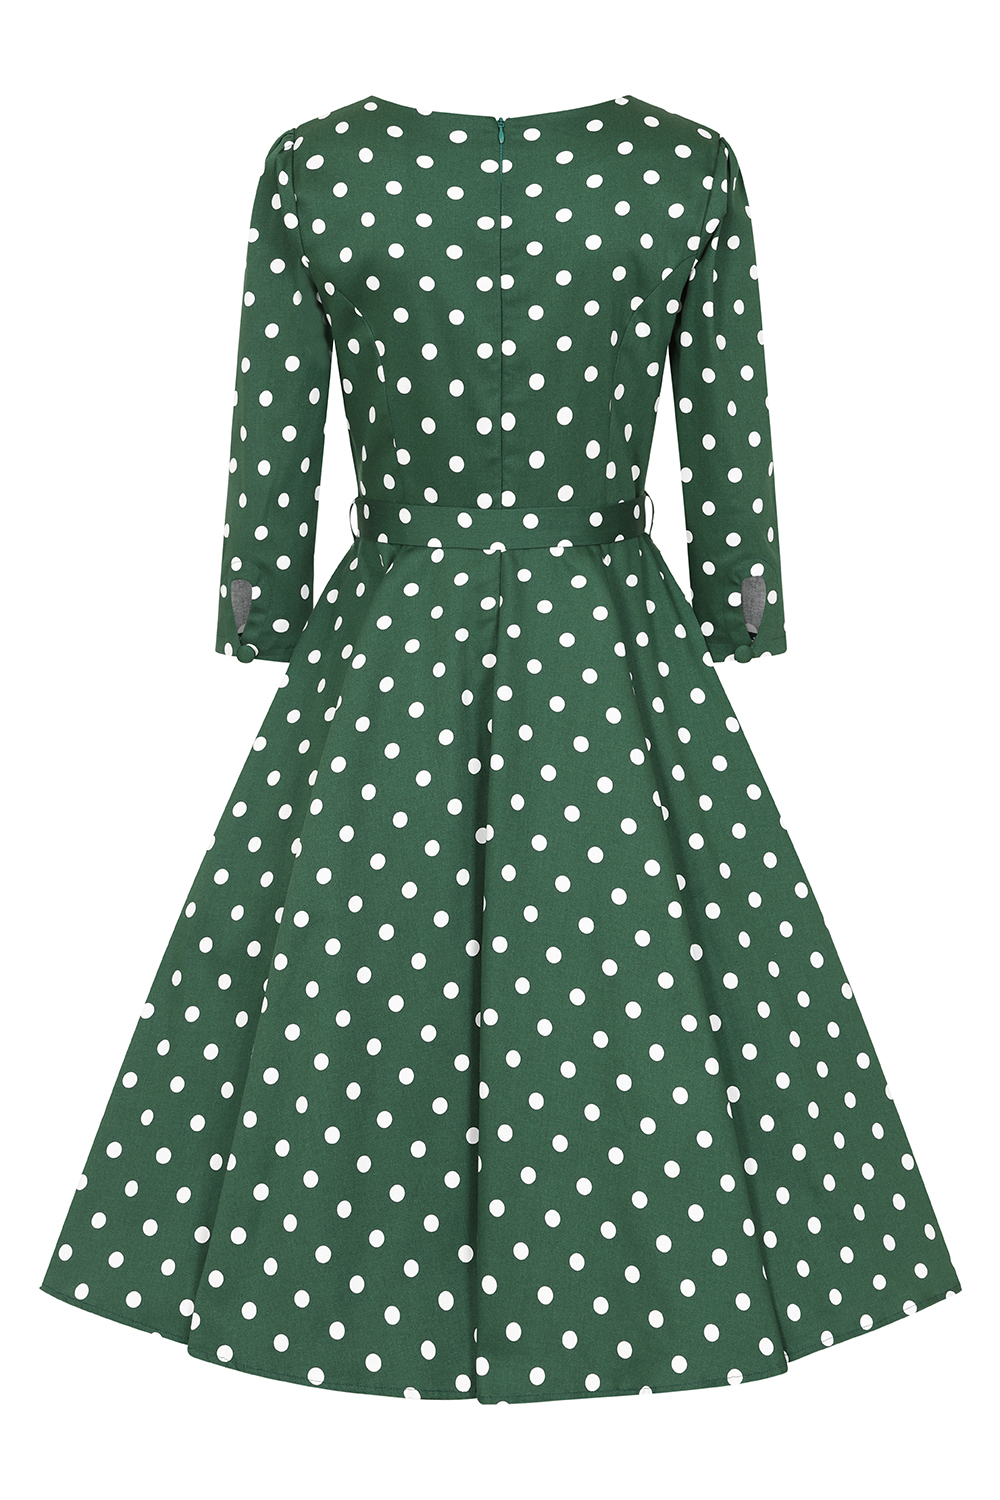 Kylie Green Polka Dot Swing Dress - Hearts & Roses London